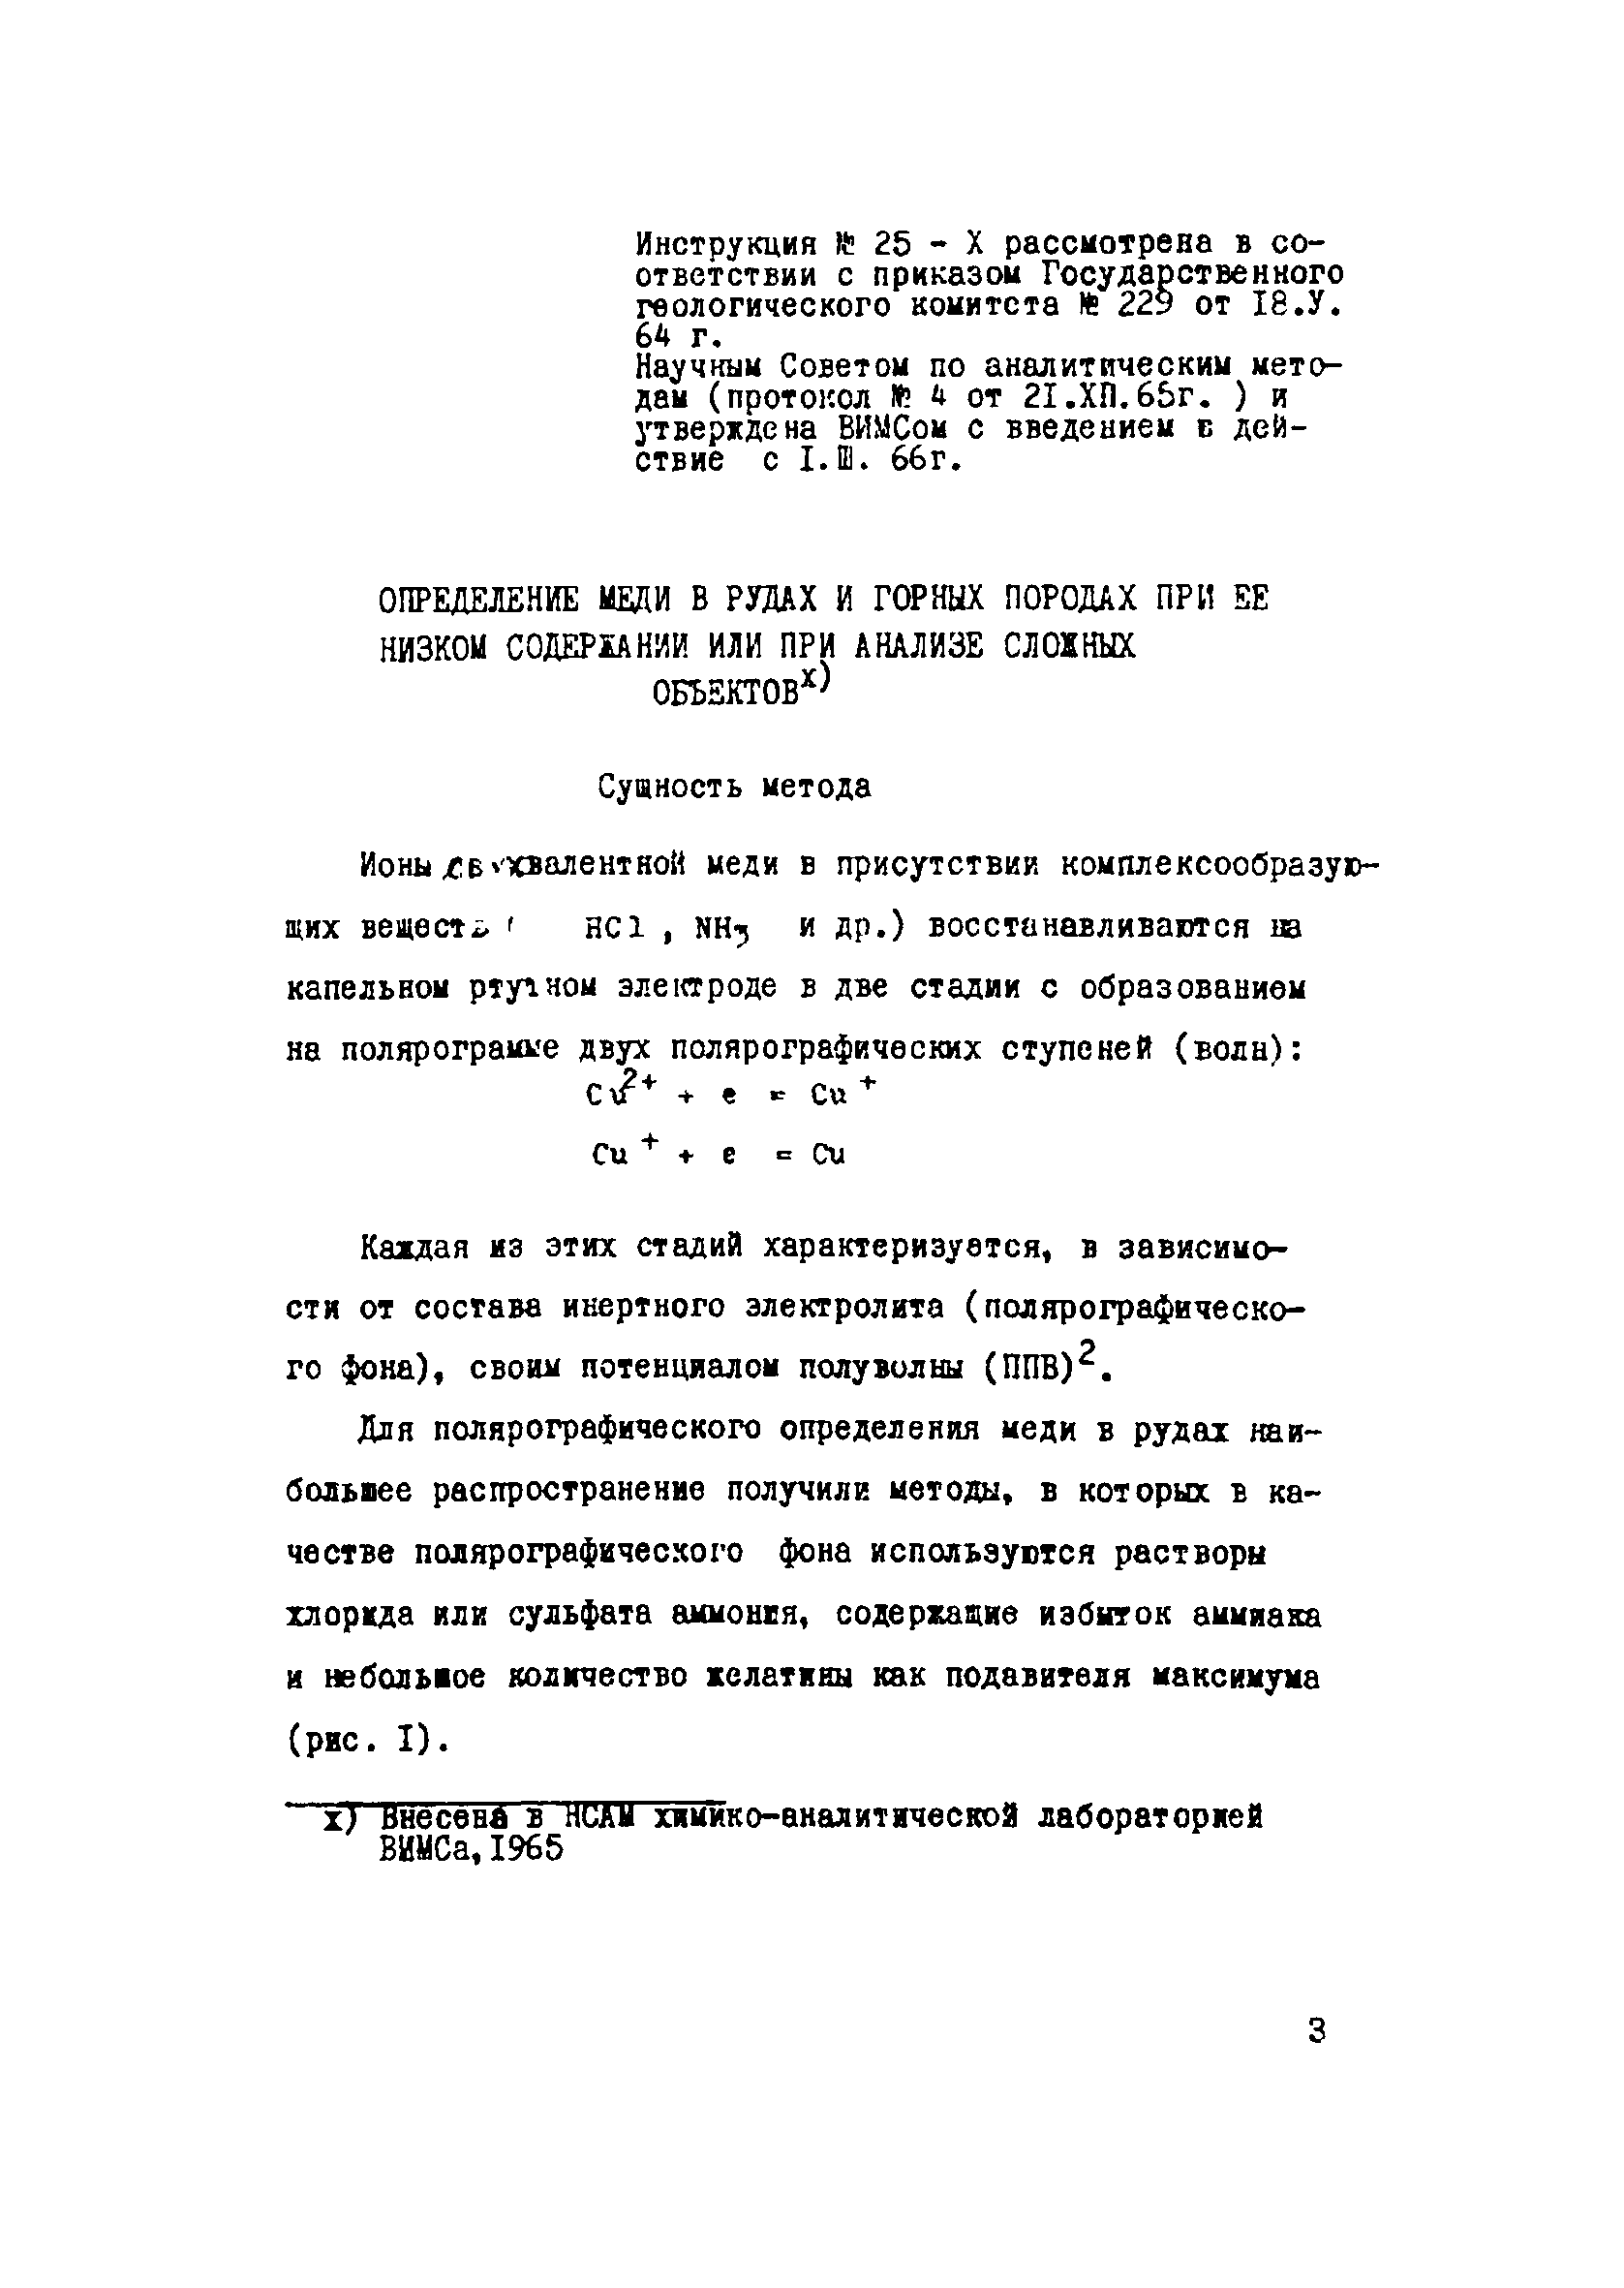 Инструкция НСАМ 25-Х